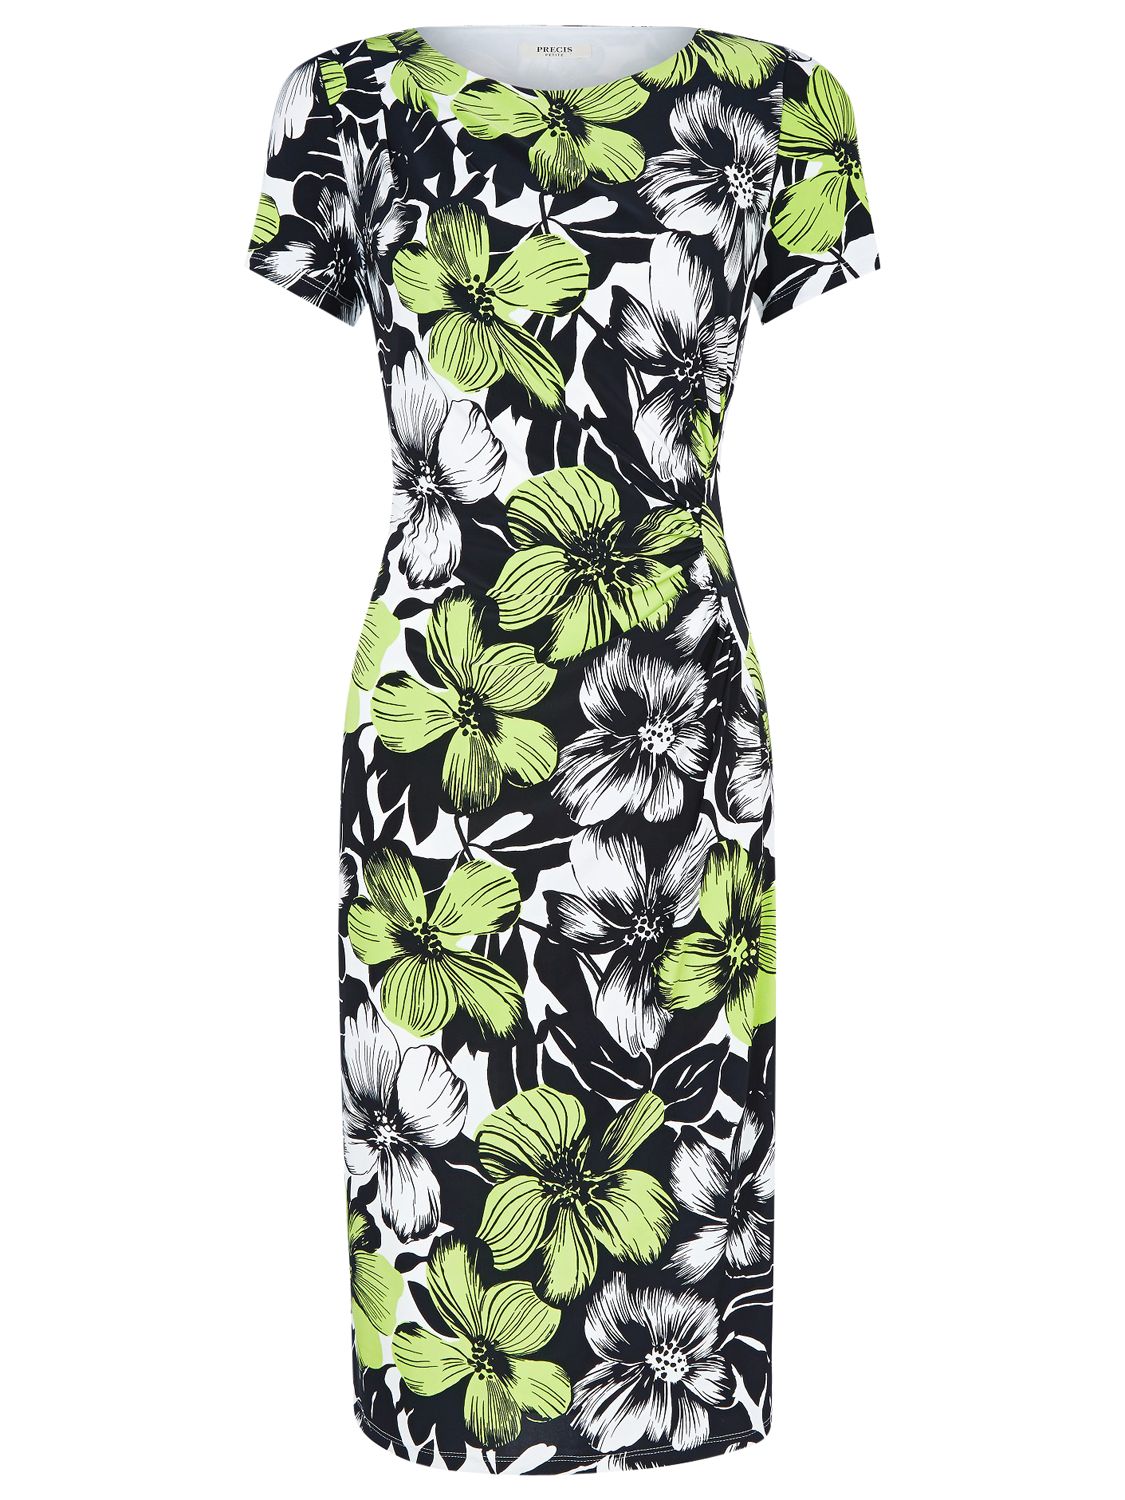 Precis Petite Lime Floral Print Dress, Multi